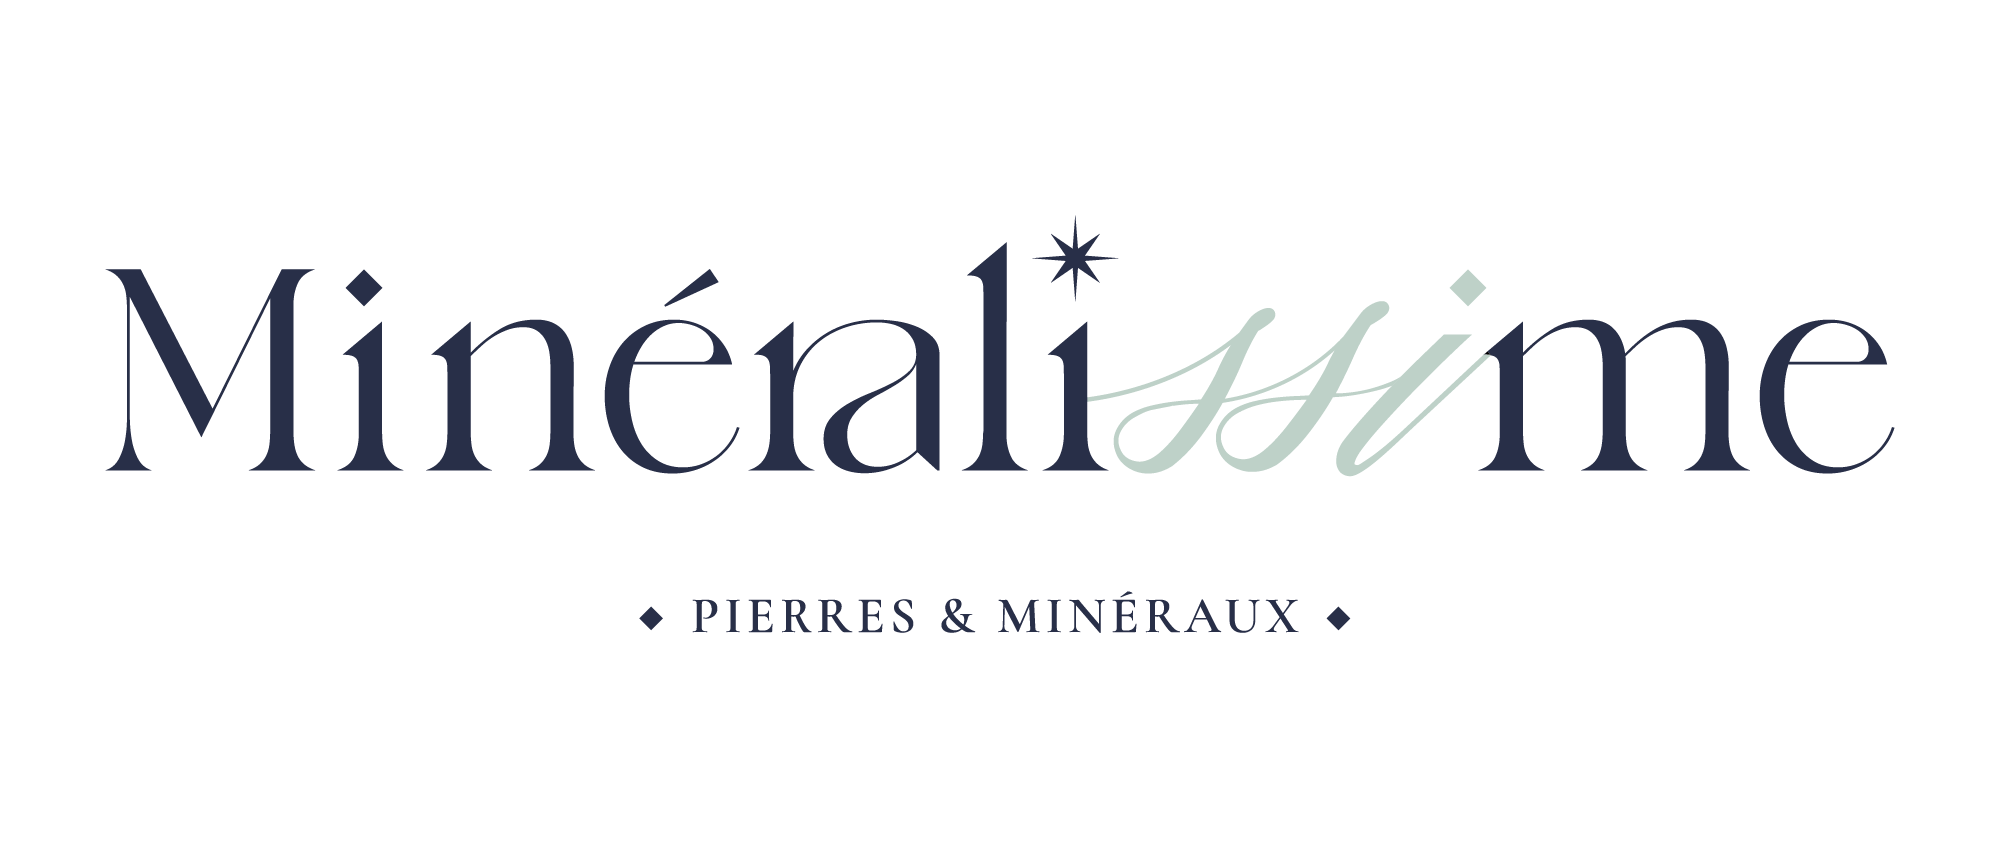 logo minralissime pierres et minéraux